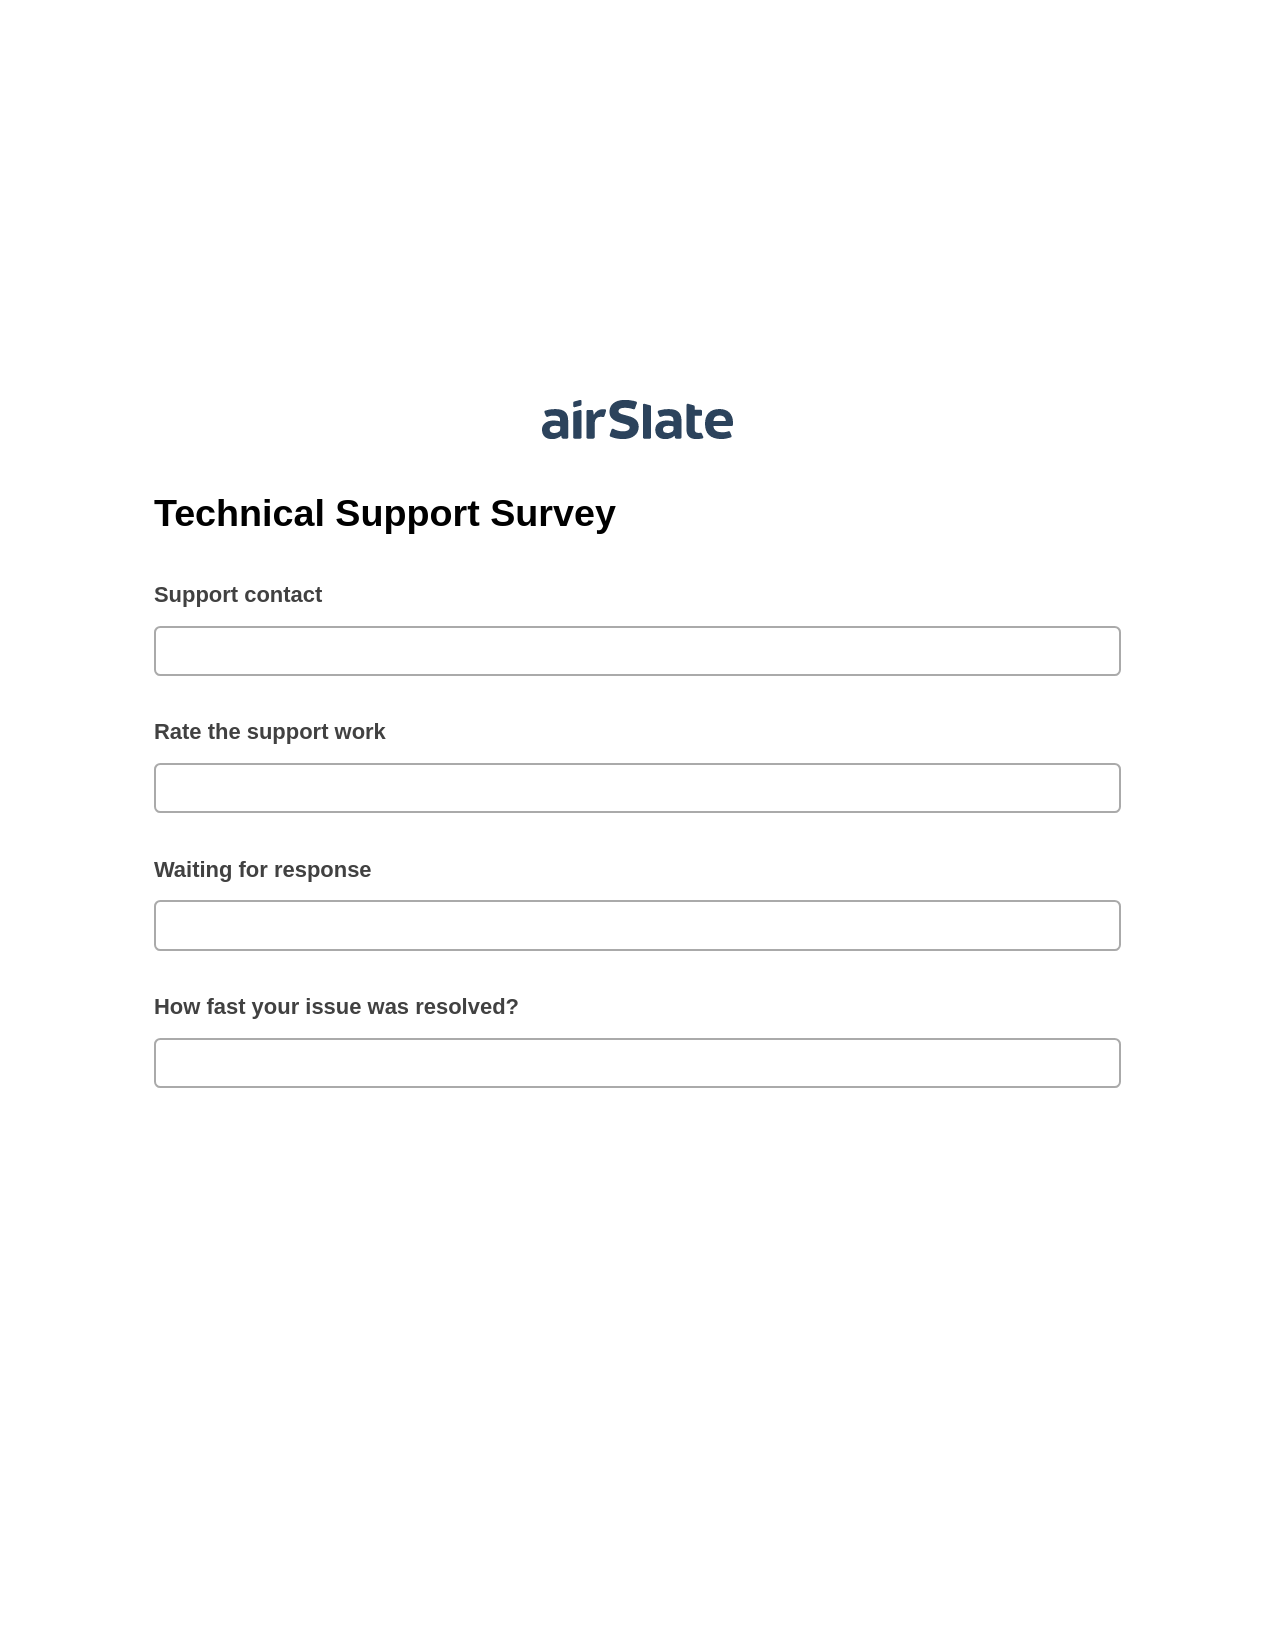 Technical Support Survey Prefill from NetSuite records, Create Slate every Google Sheet Update Bot, Slack Notification Postfinish Bot